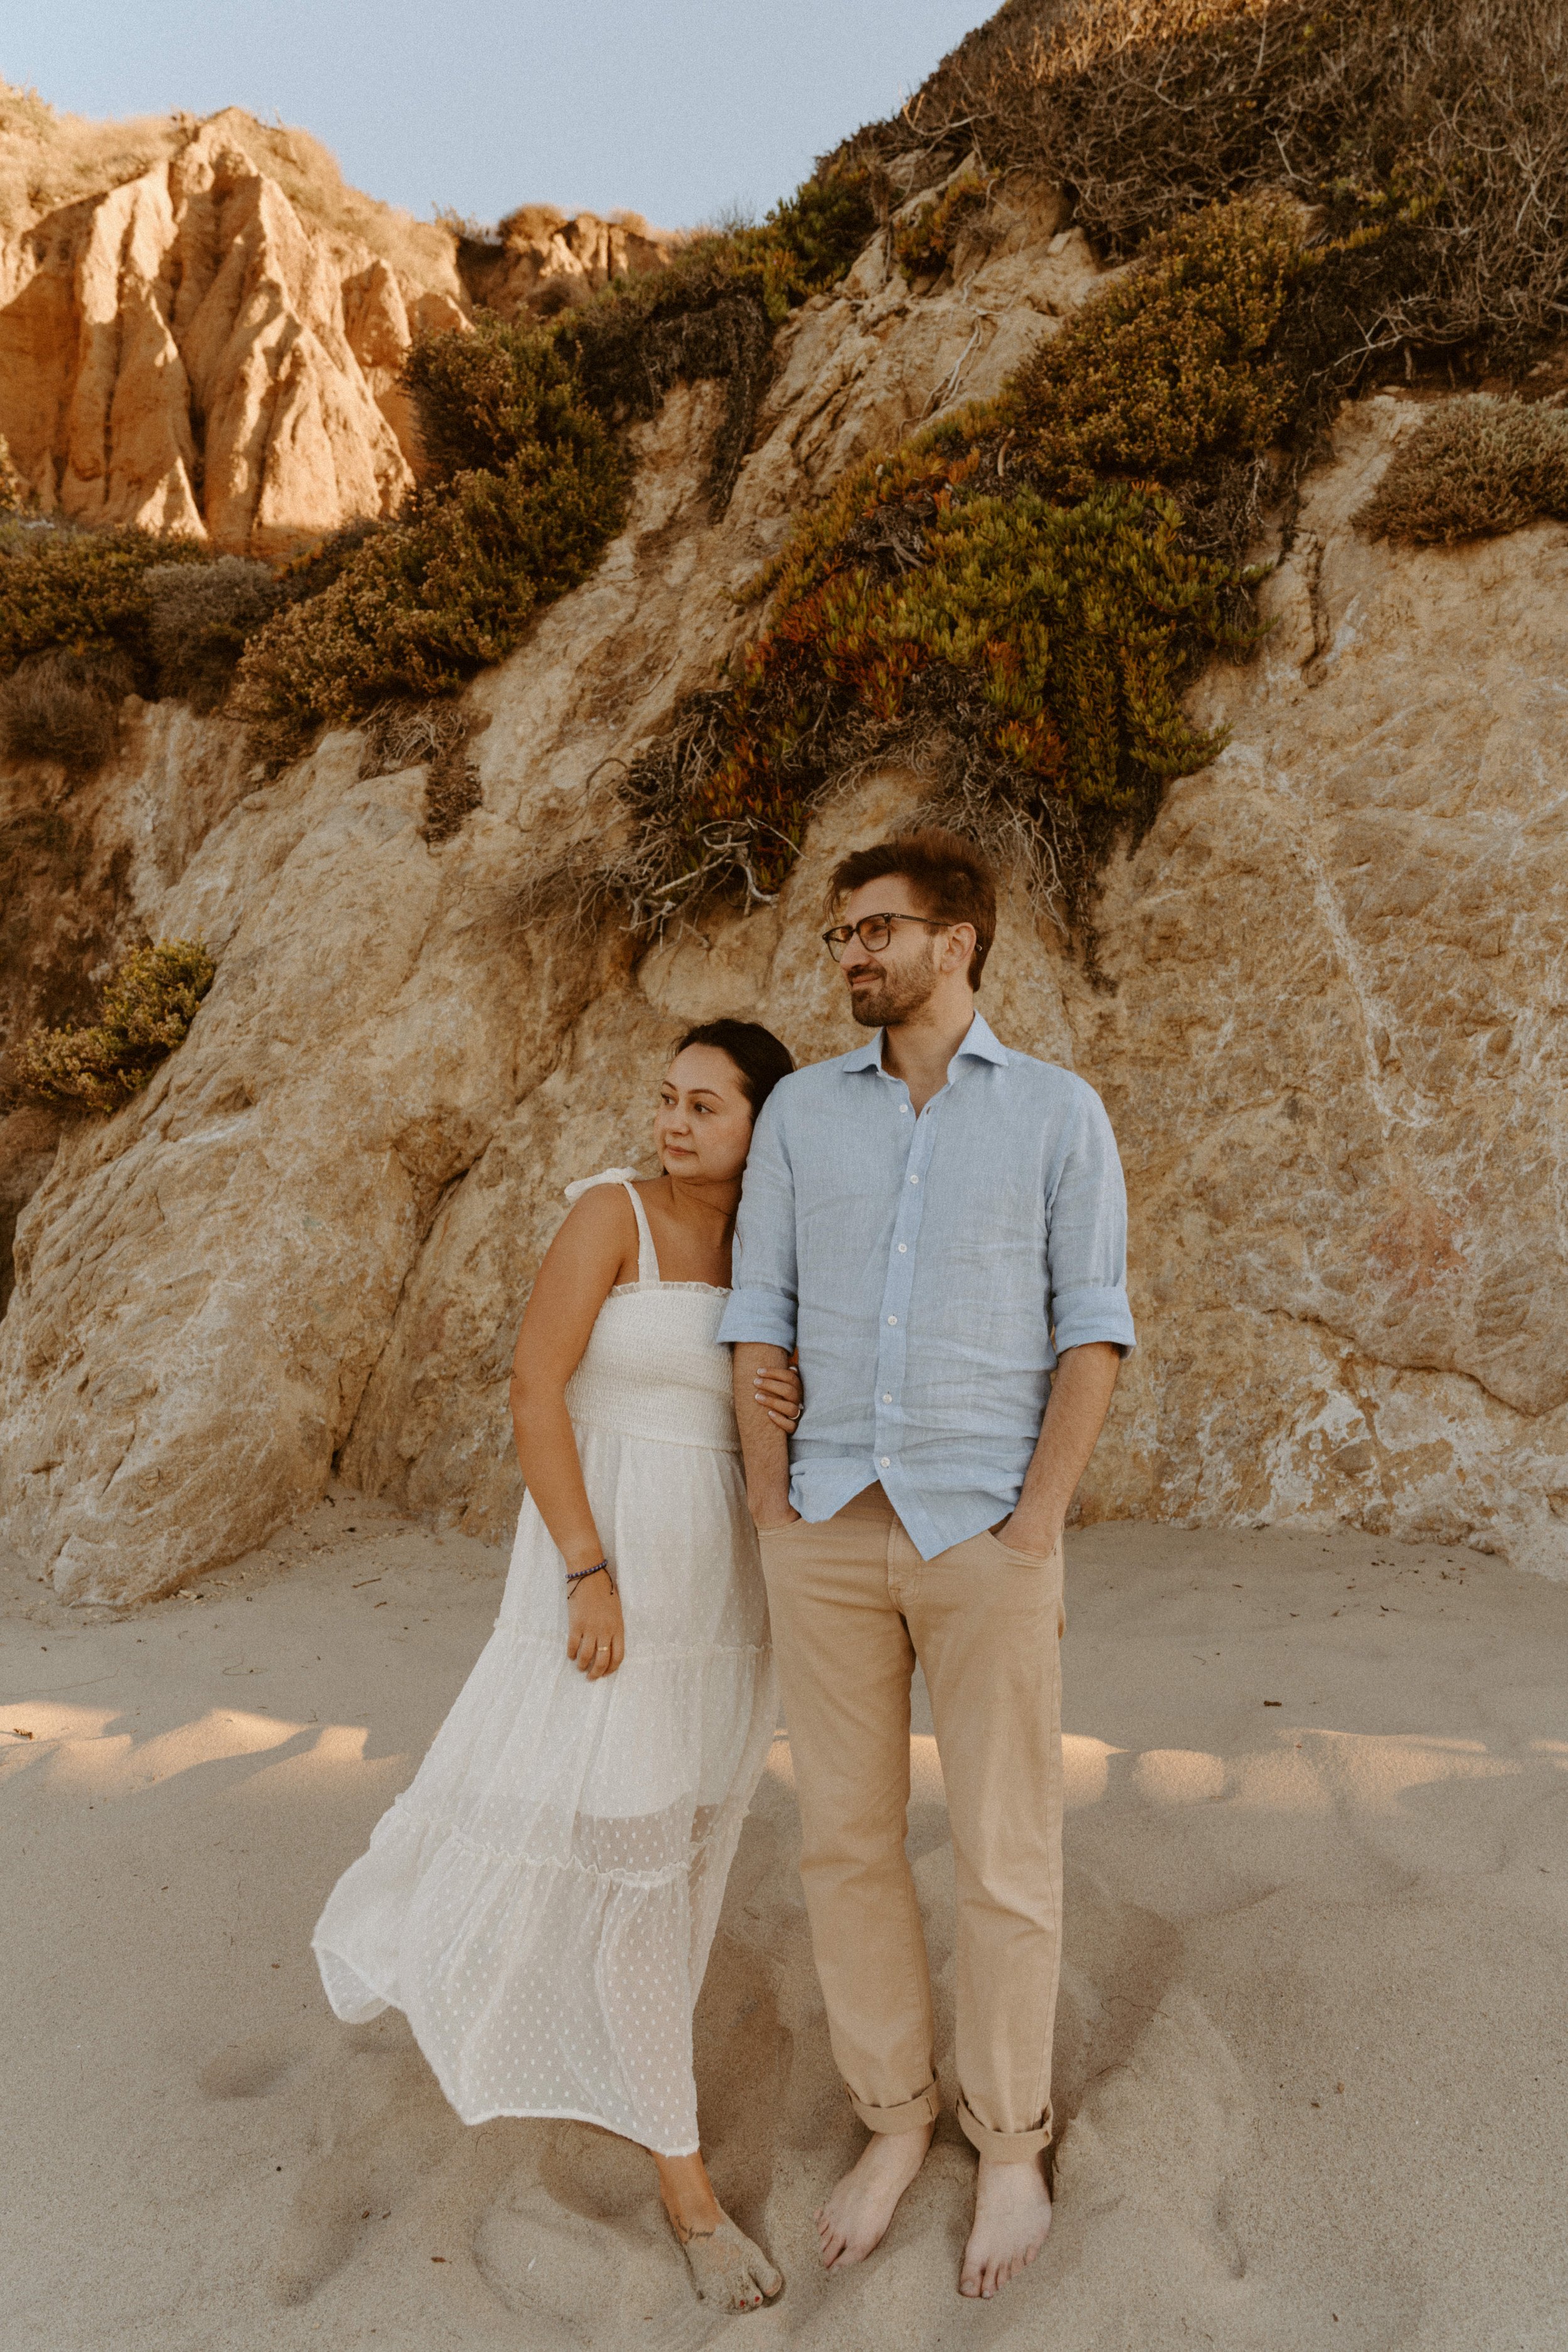 Best Engagement Session Locations in Southern California - El Matador Beach, Malibu | California Wedding Photographer